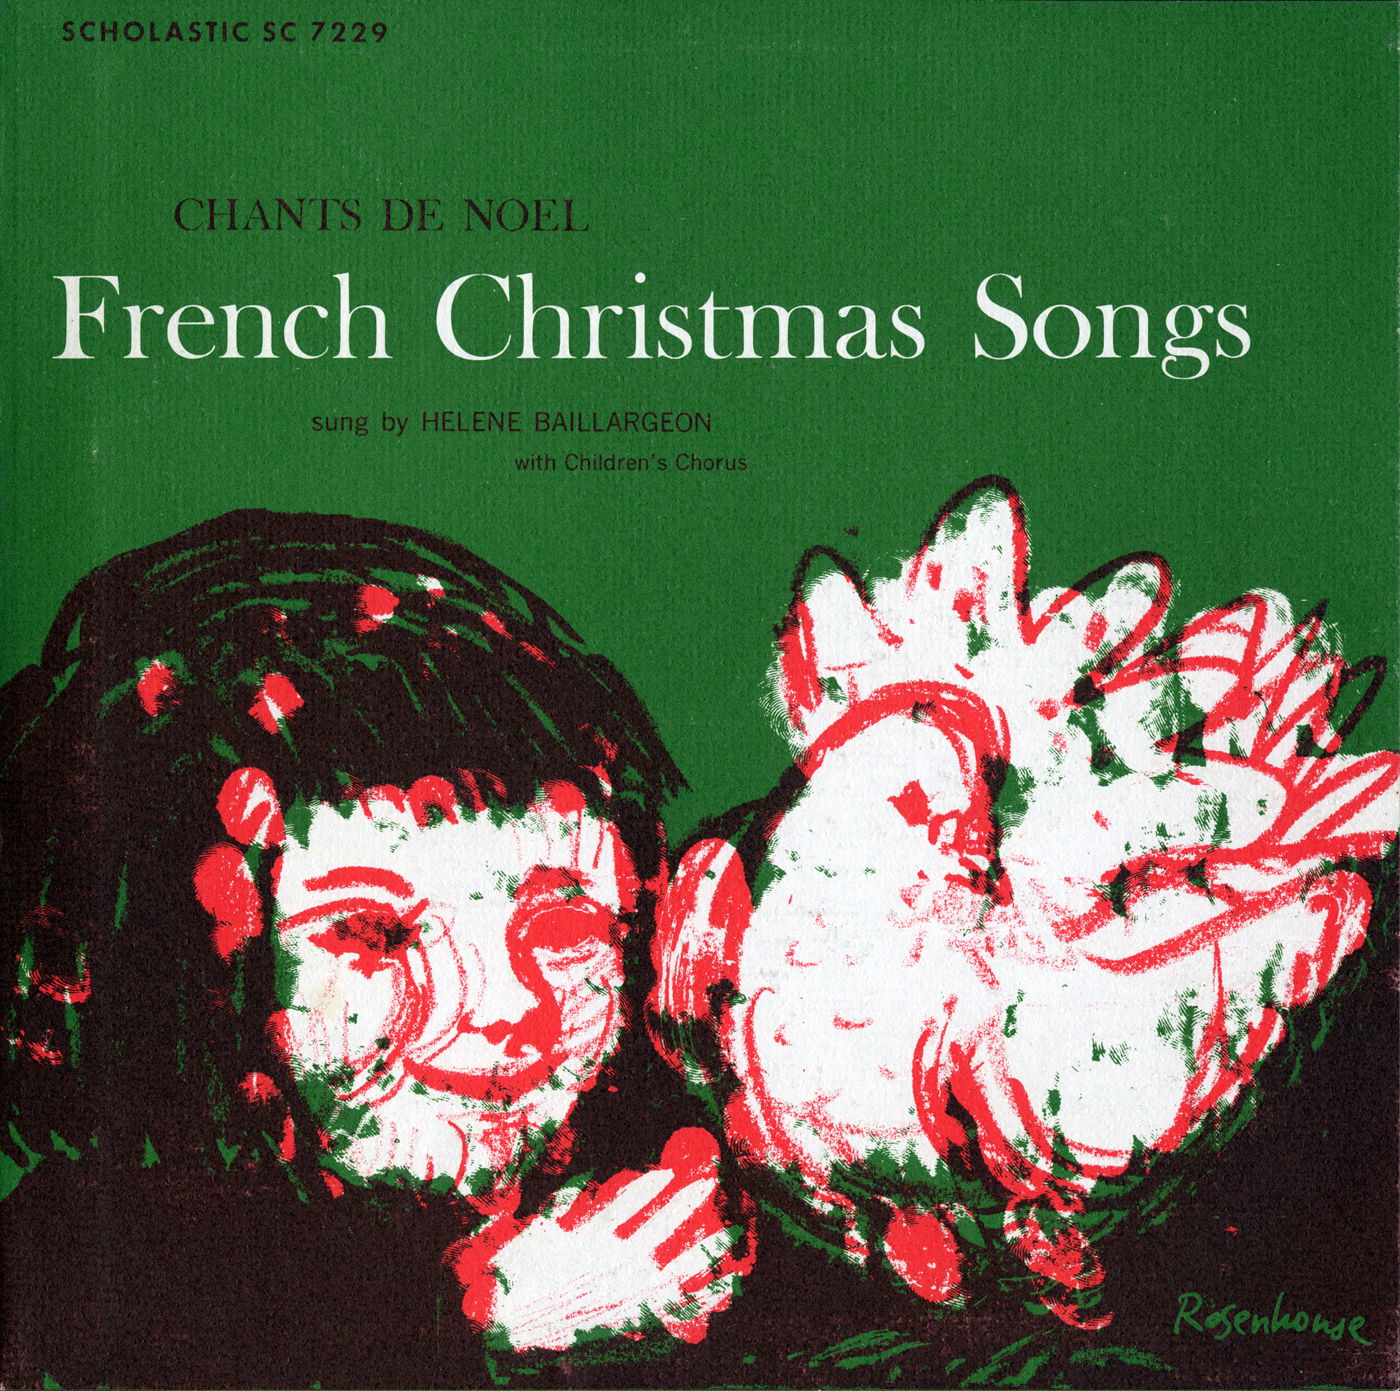 Chansons de Noël - Christmas French Songs - Listening Activities - BUNDLE!